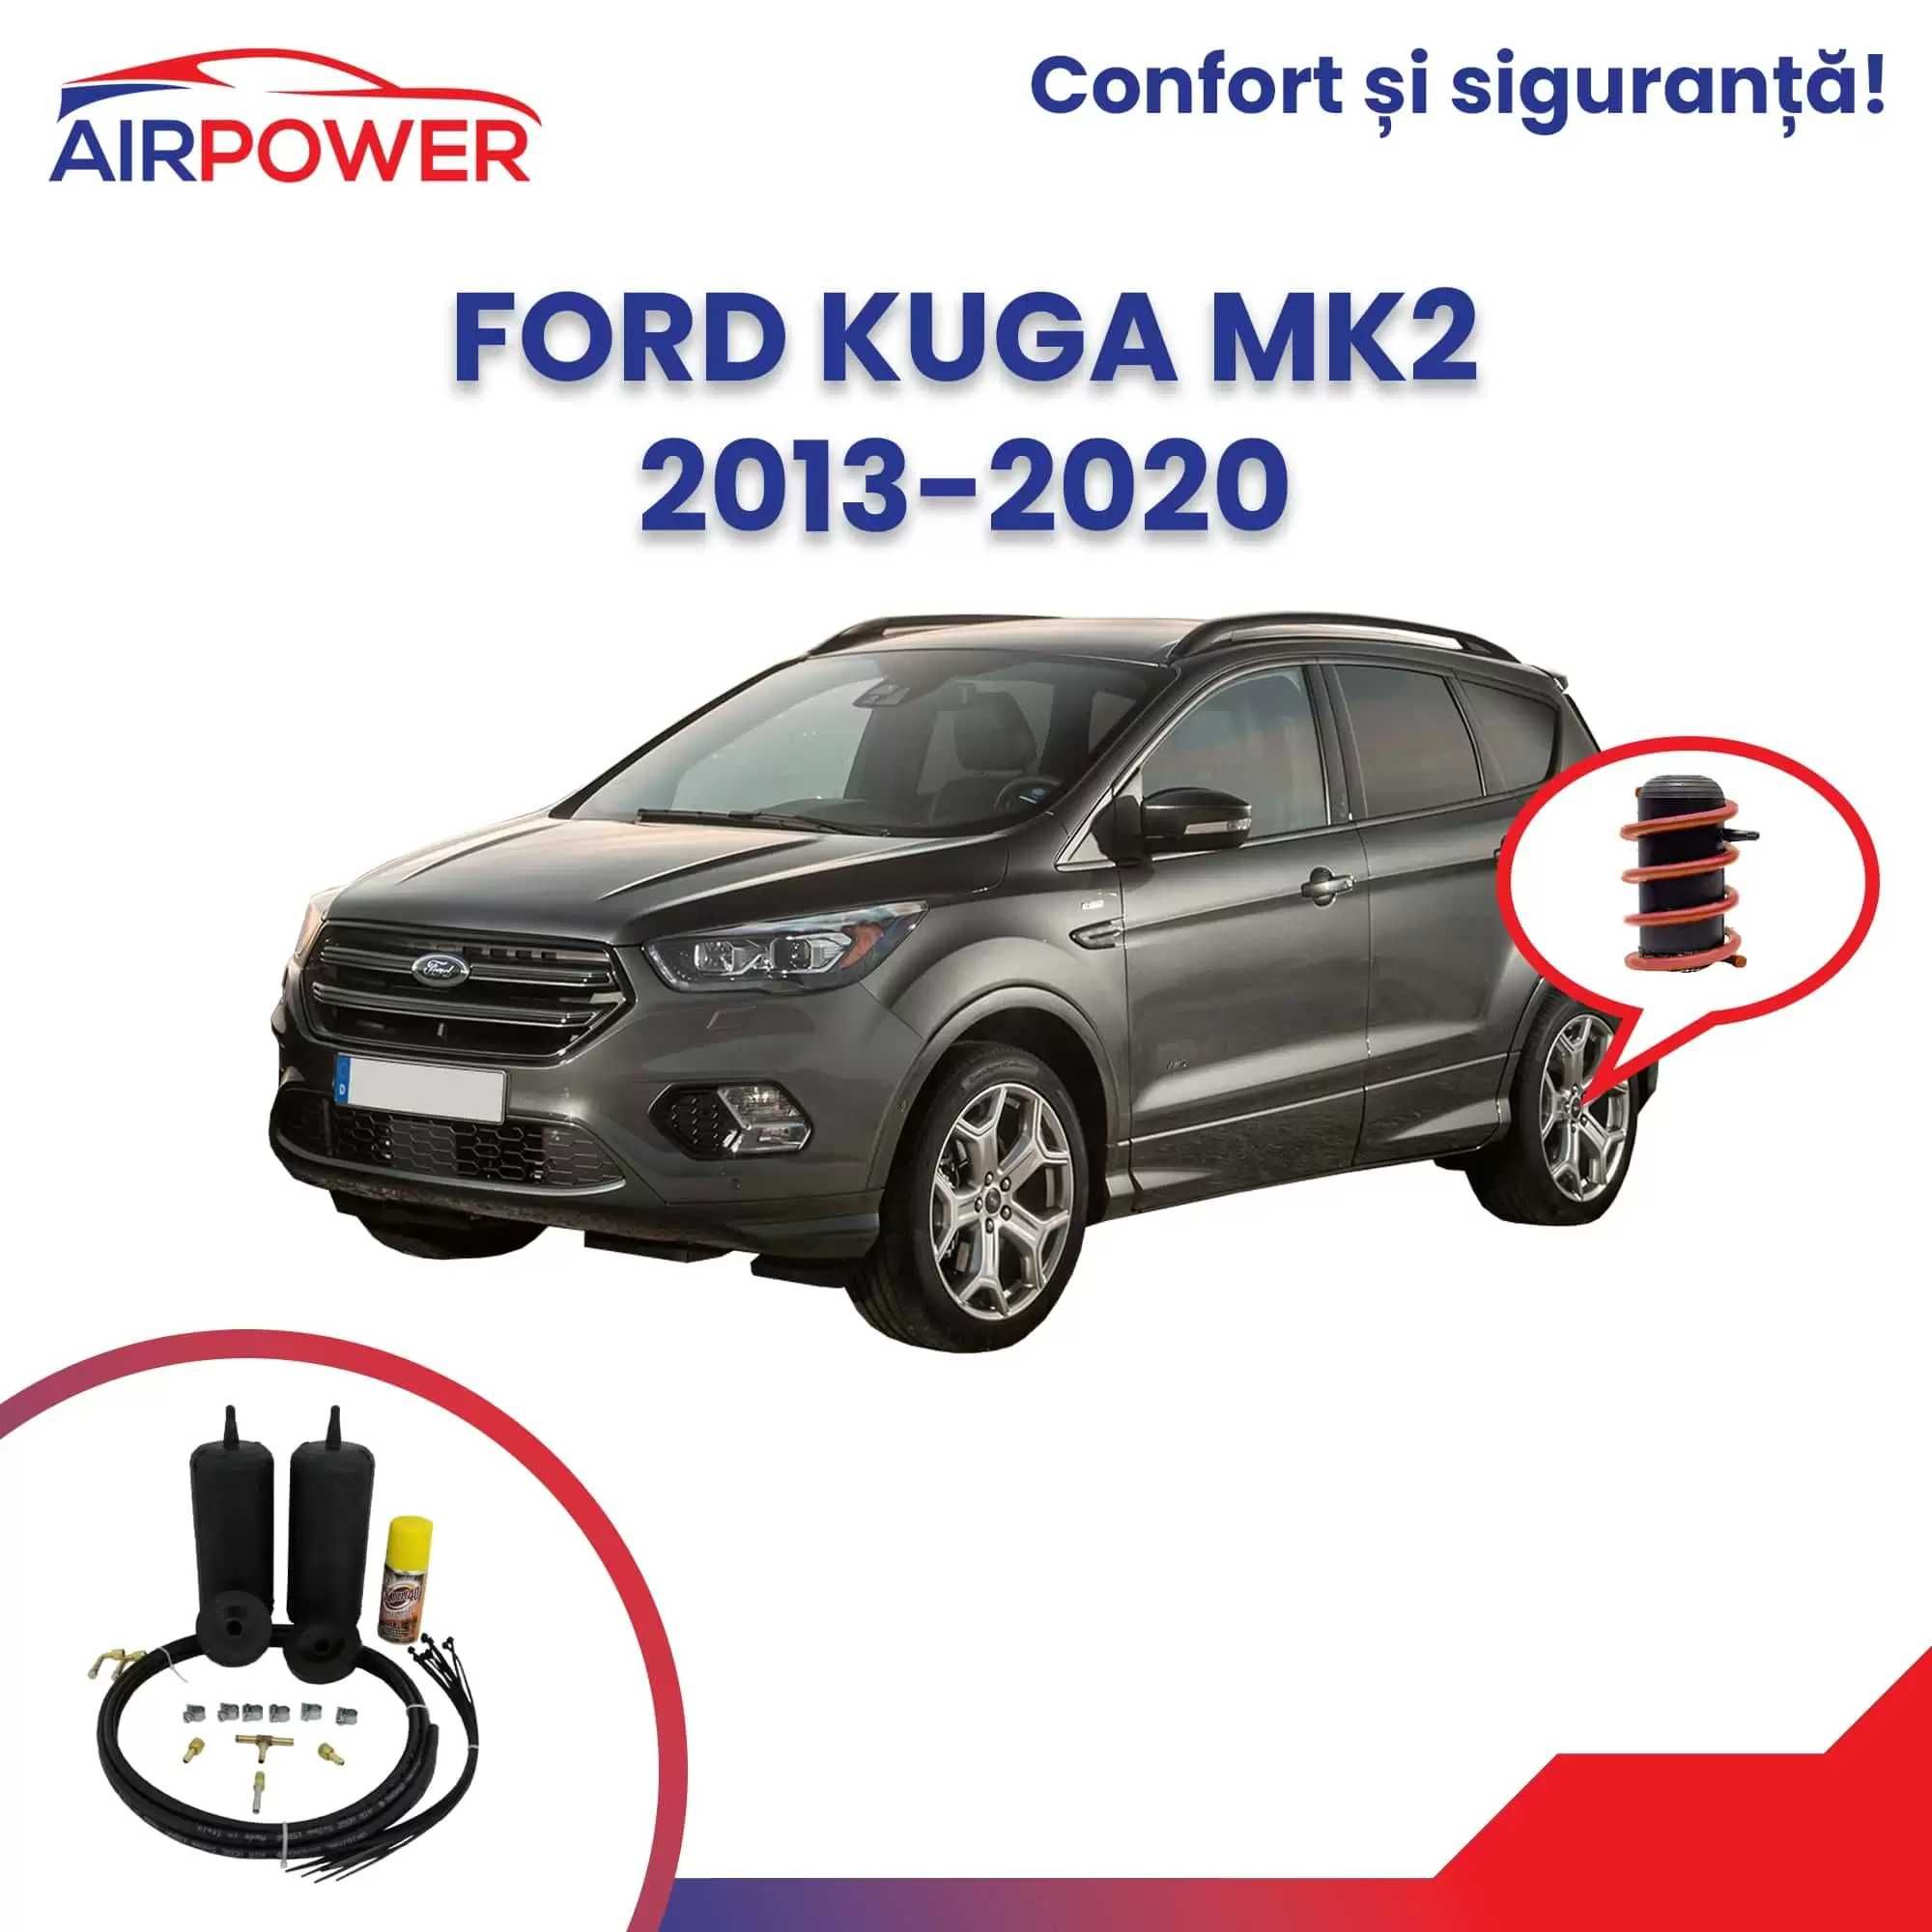 Perne auxiliare, perne auto pneumatice, Ford Kuga MK1/MK2